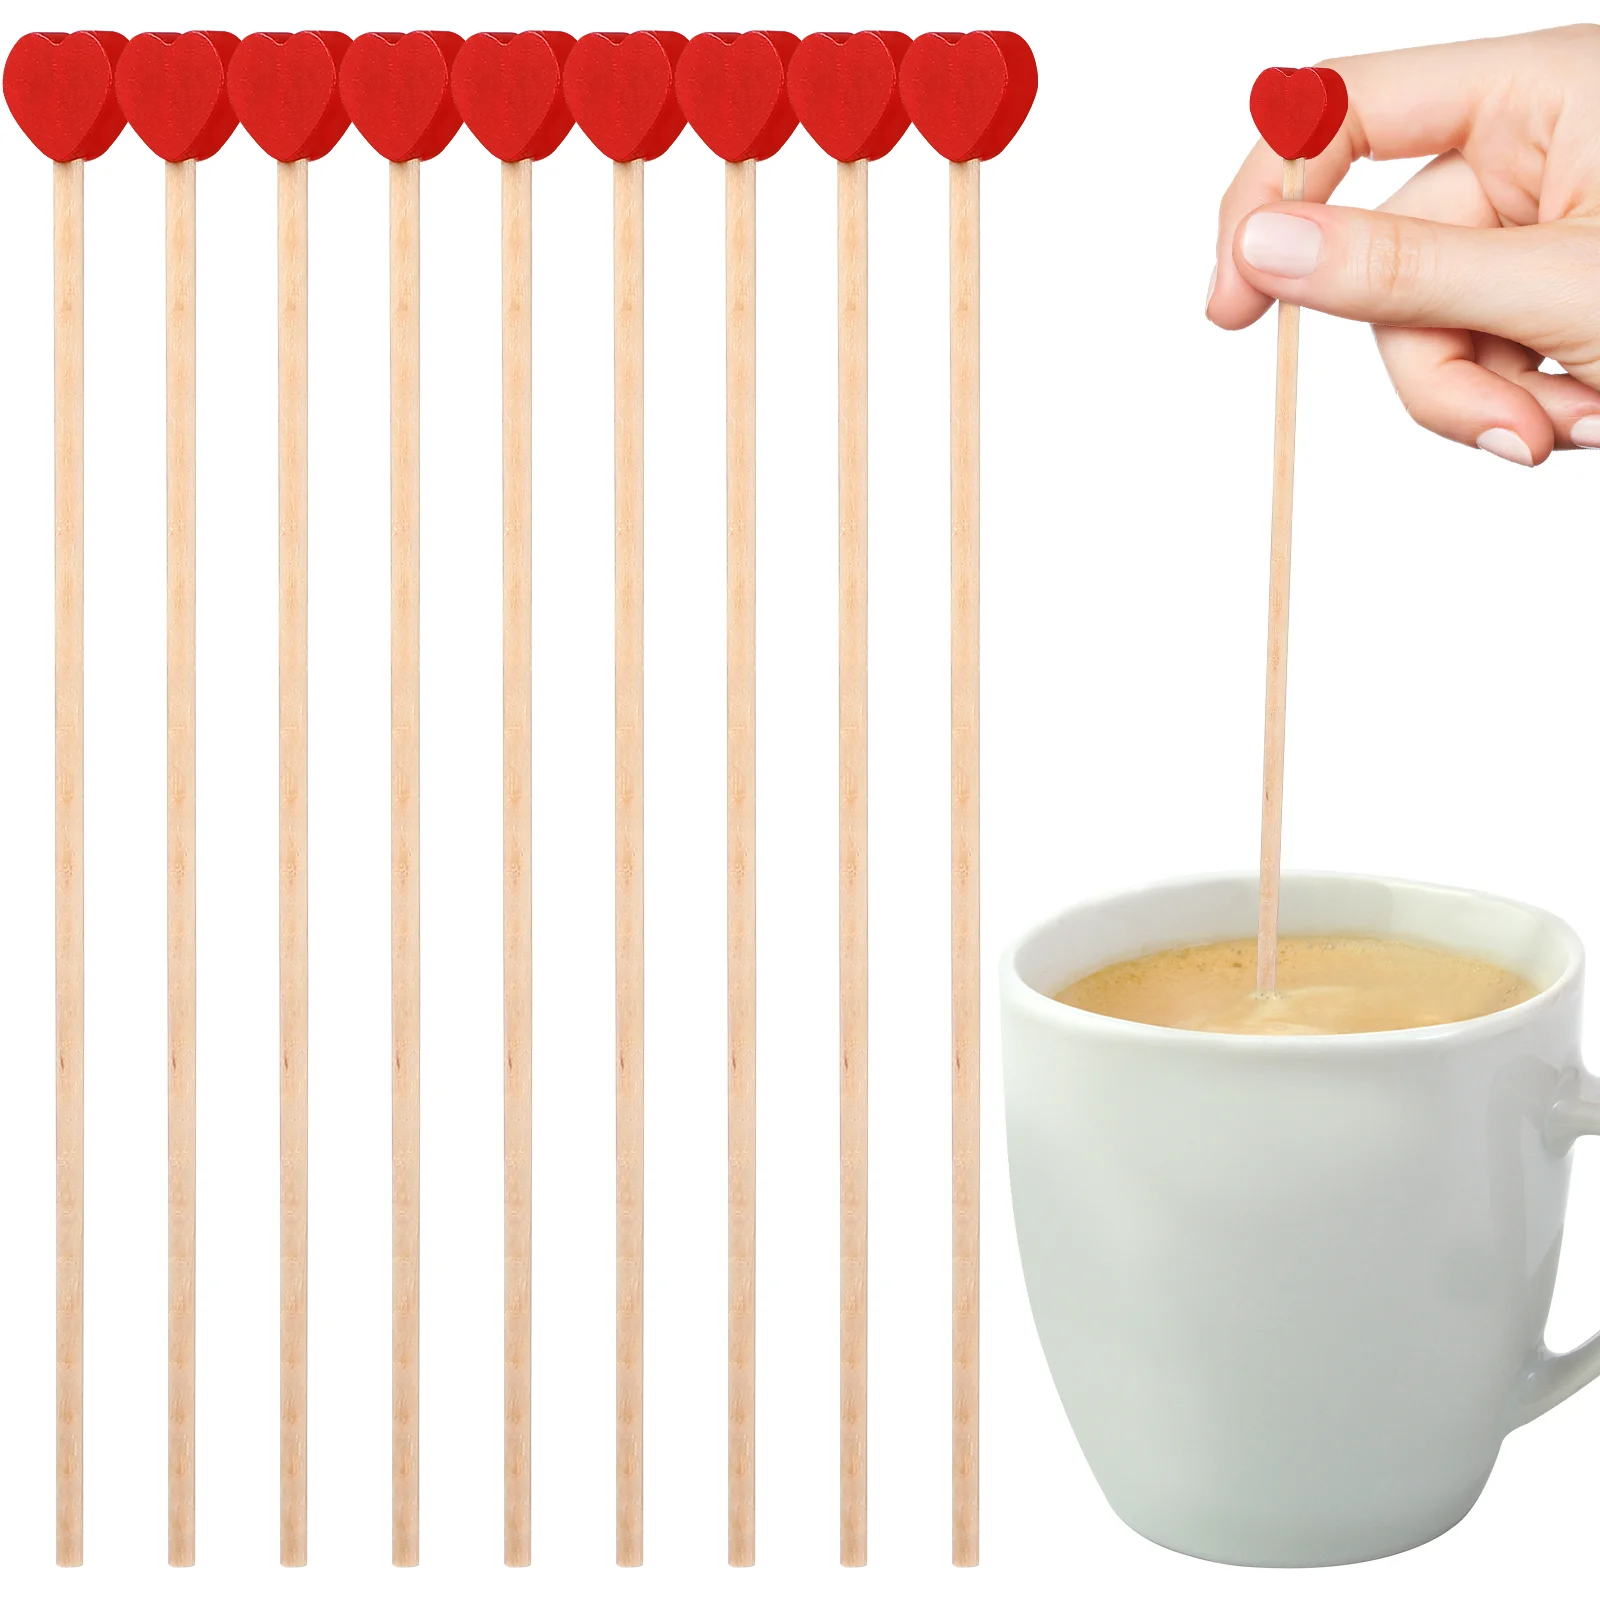 

100 Pcs Heart Swizzle Stick Wooden Whisk Honey Stir Sticks Coffee Stirrer Blender Stirrers Long